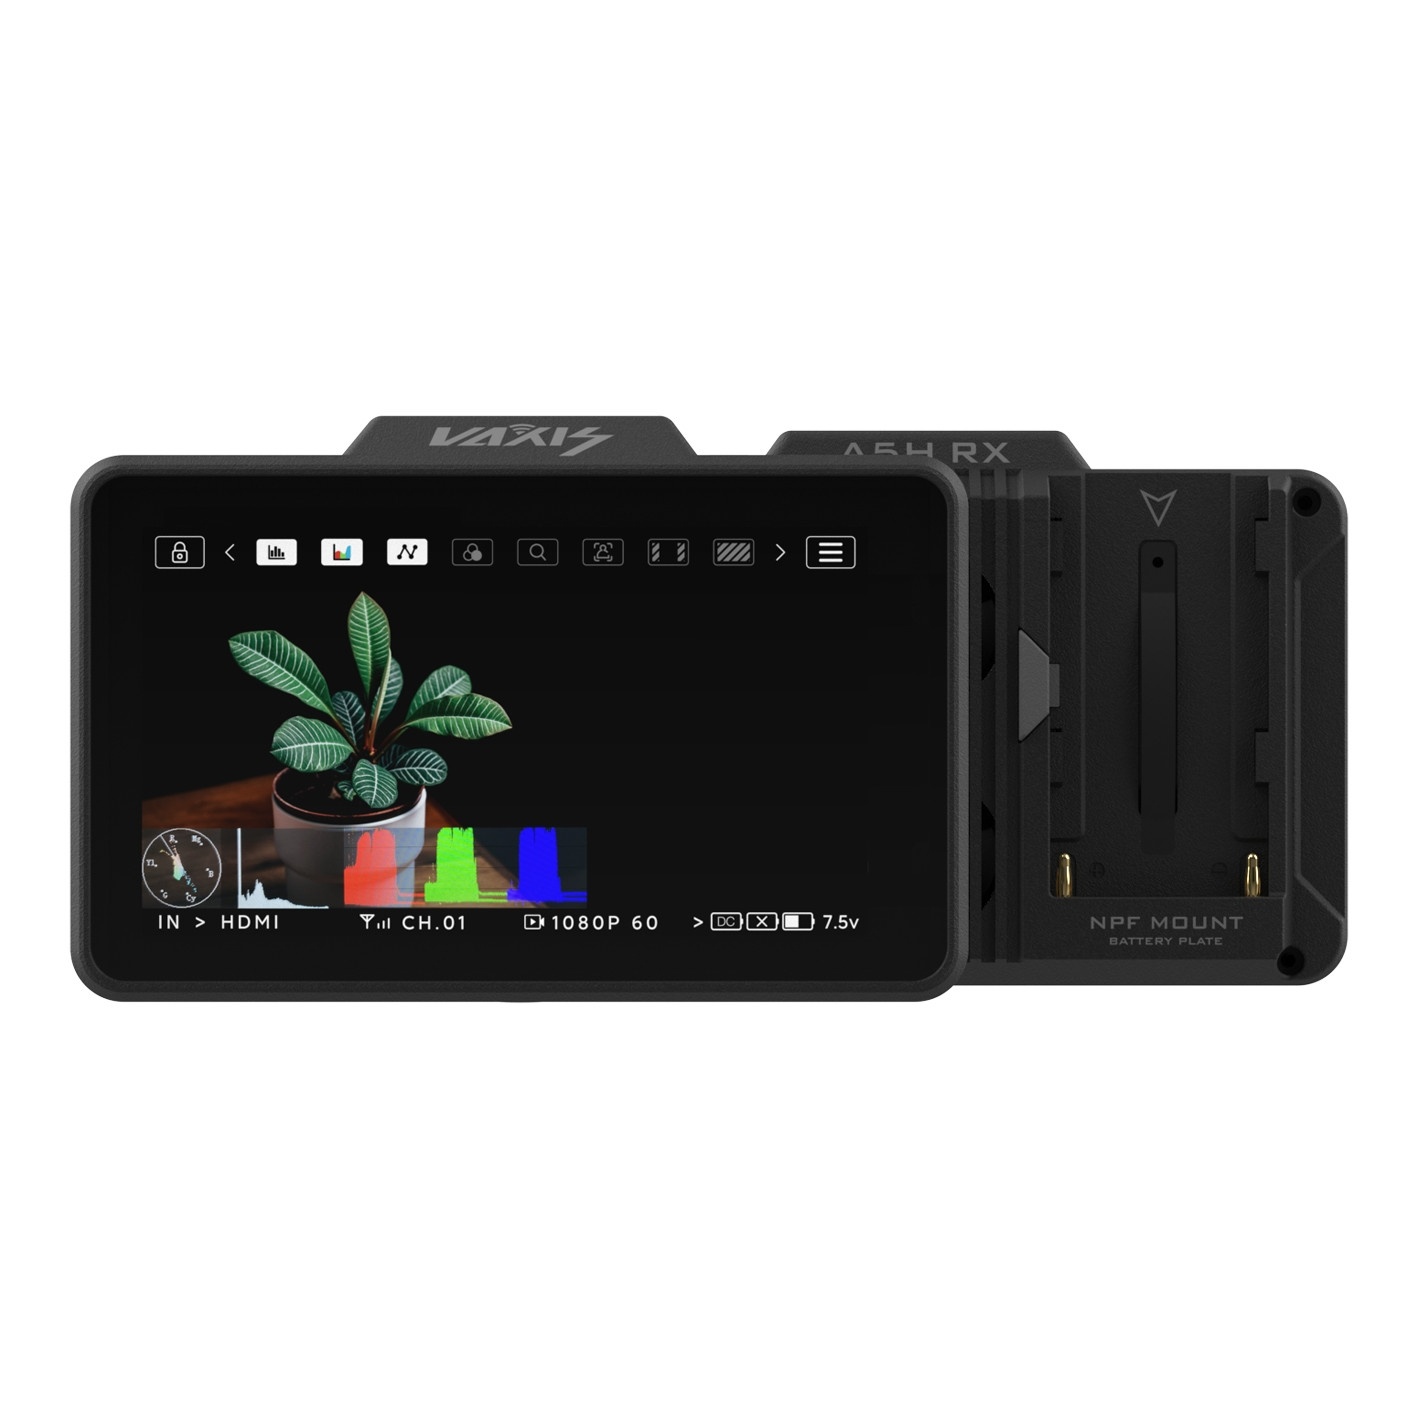 Vaxis Atom A5H 5.5" HDMI 1080P Wireless Monitors (TX & RX Kit)